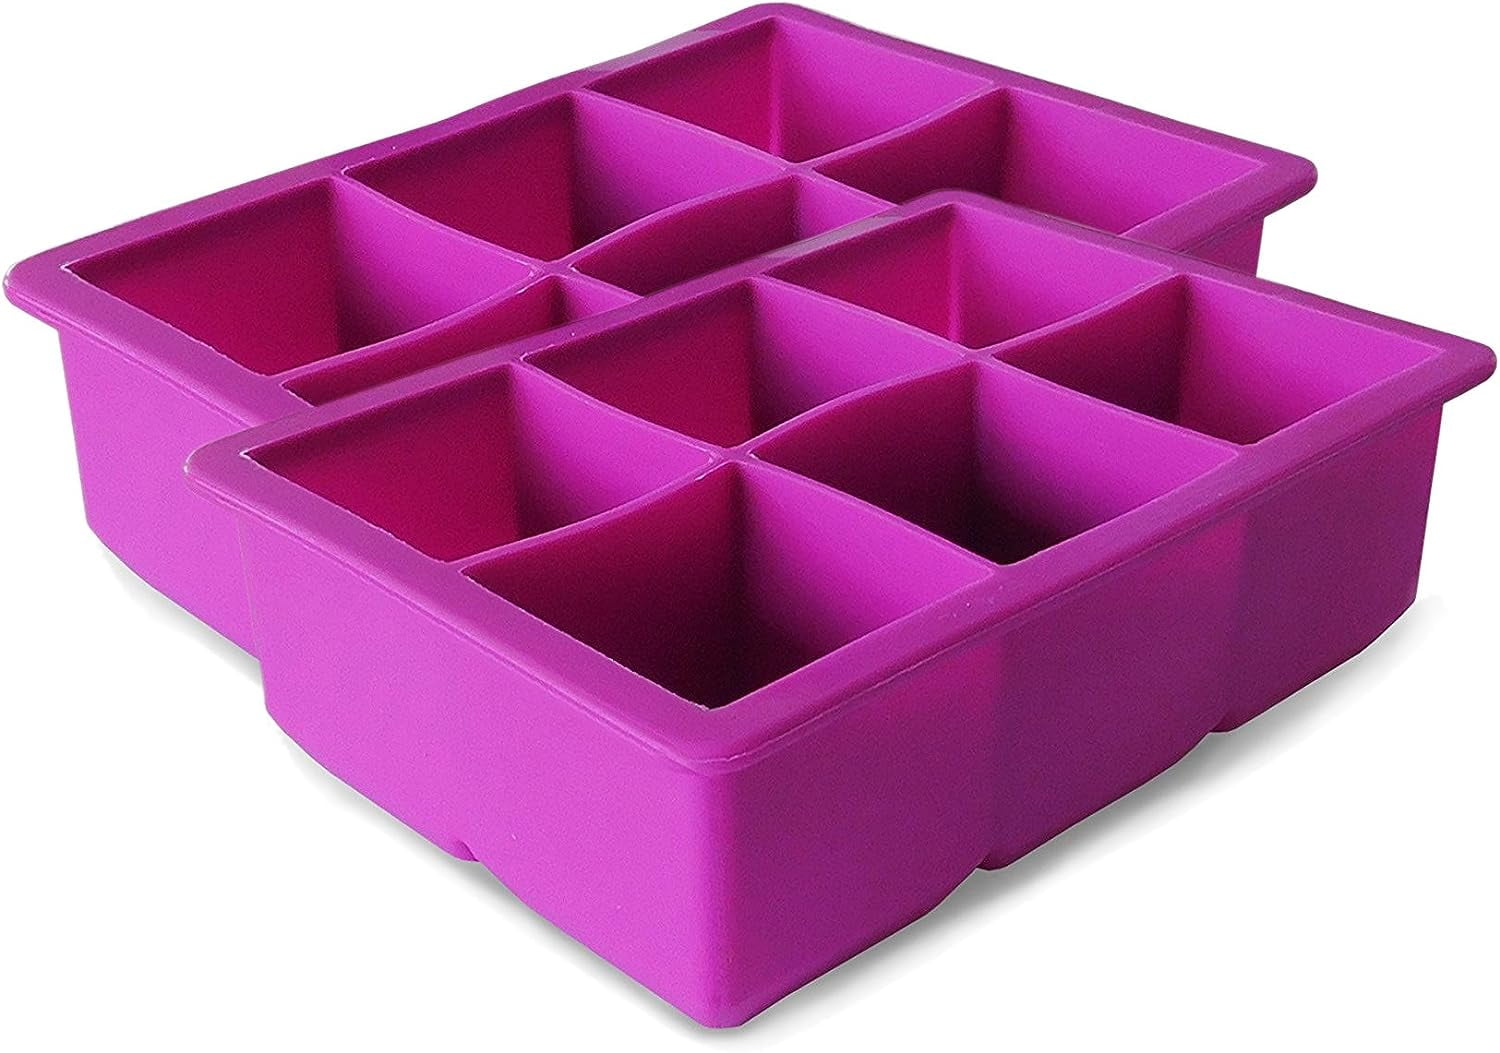 Xmmswdla Big Ice Cube Trays Summer Home Ice-Block-Mold Refrigerator Homemade Ice Block Box Food Grade Silicone Ice Cube Trays B